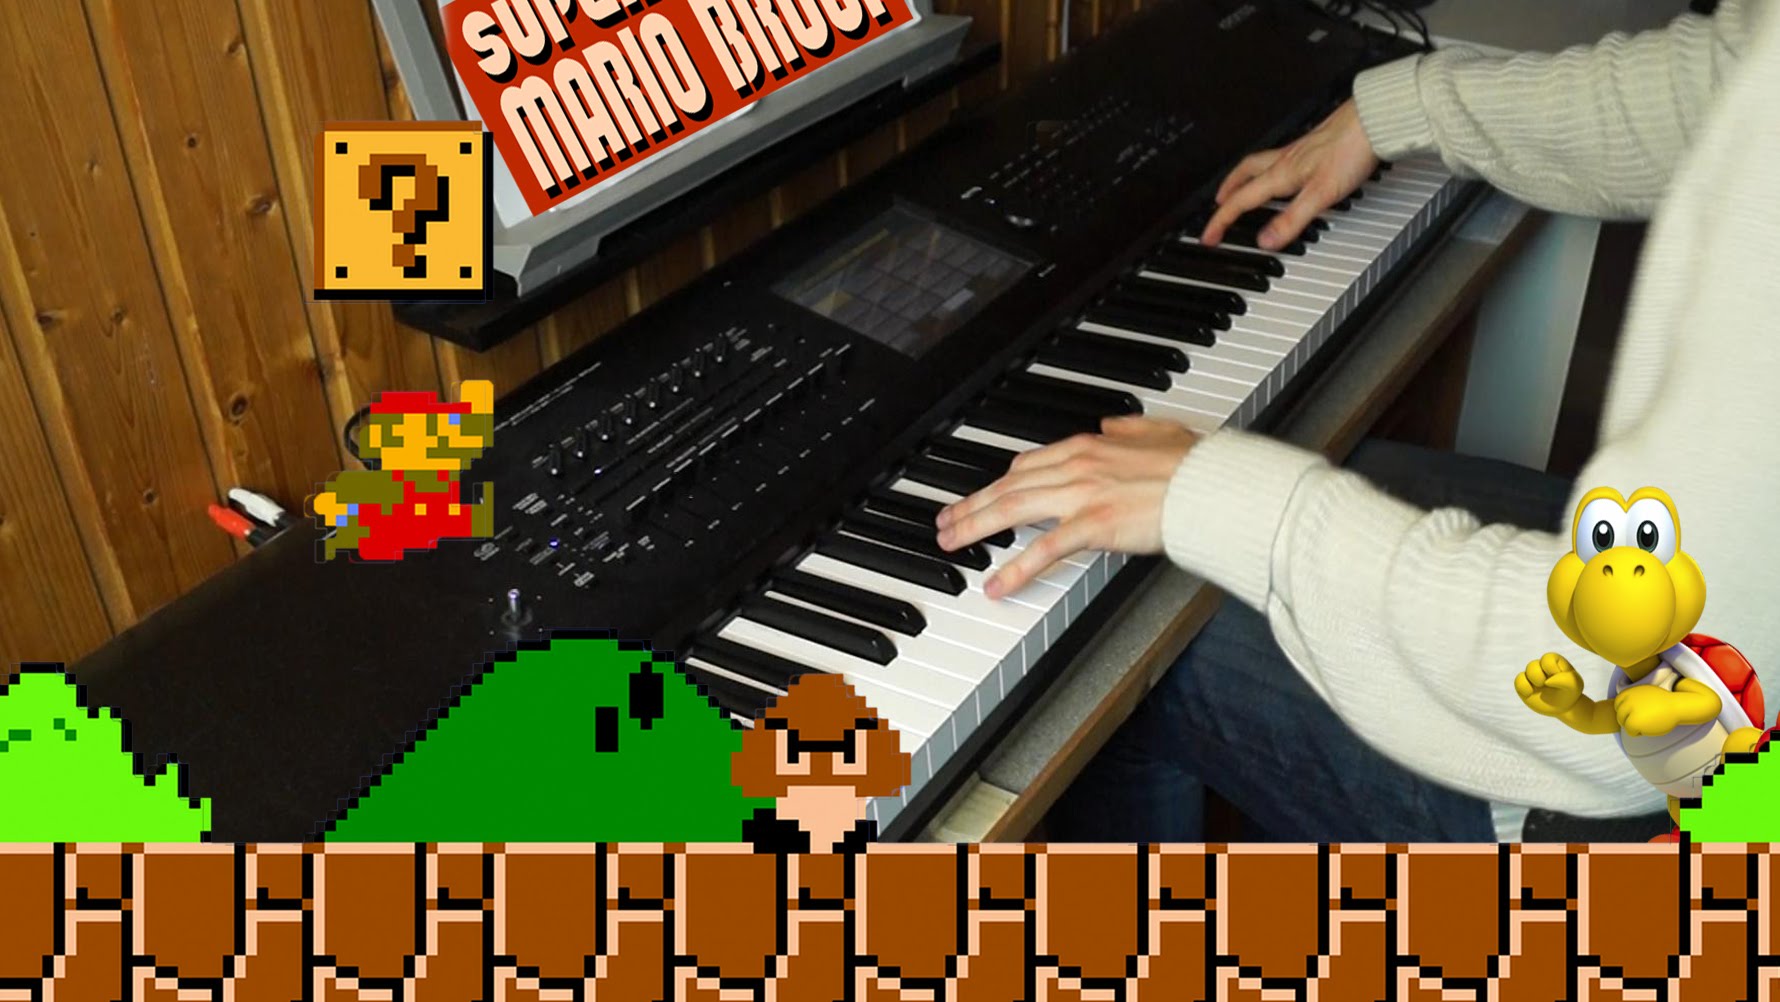 Mario bros theme. Super Mario 3 Piano. Super Mario 64 Mad Piano. Super Mario brothers Bowlser playing the Piano Video download.